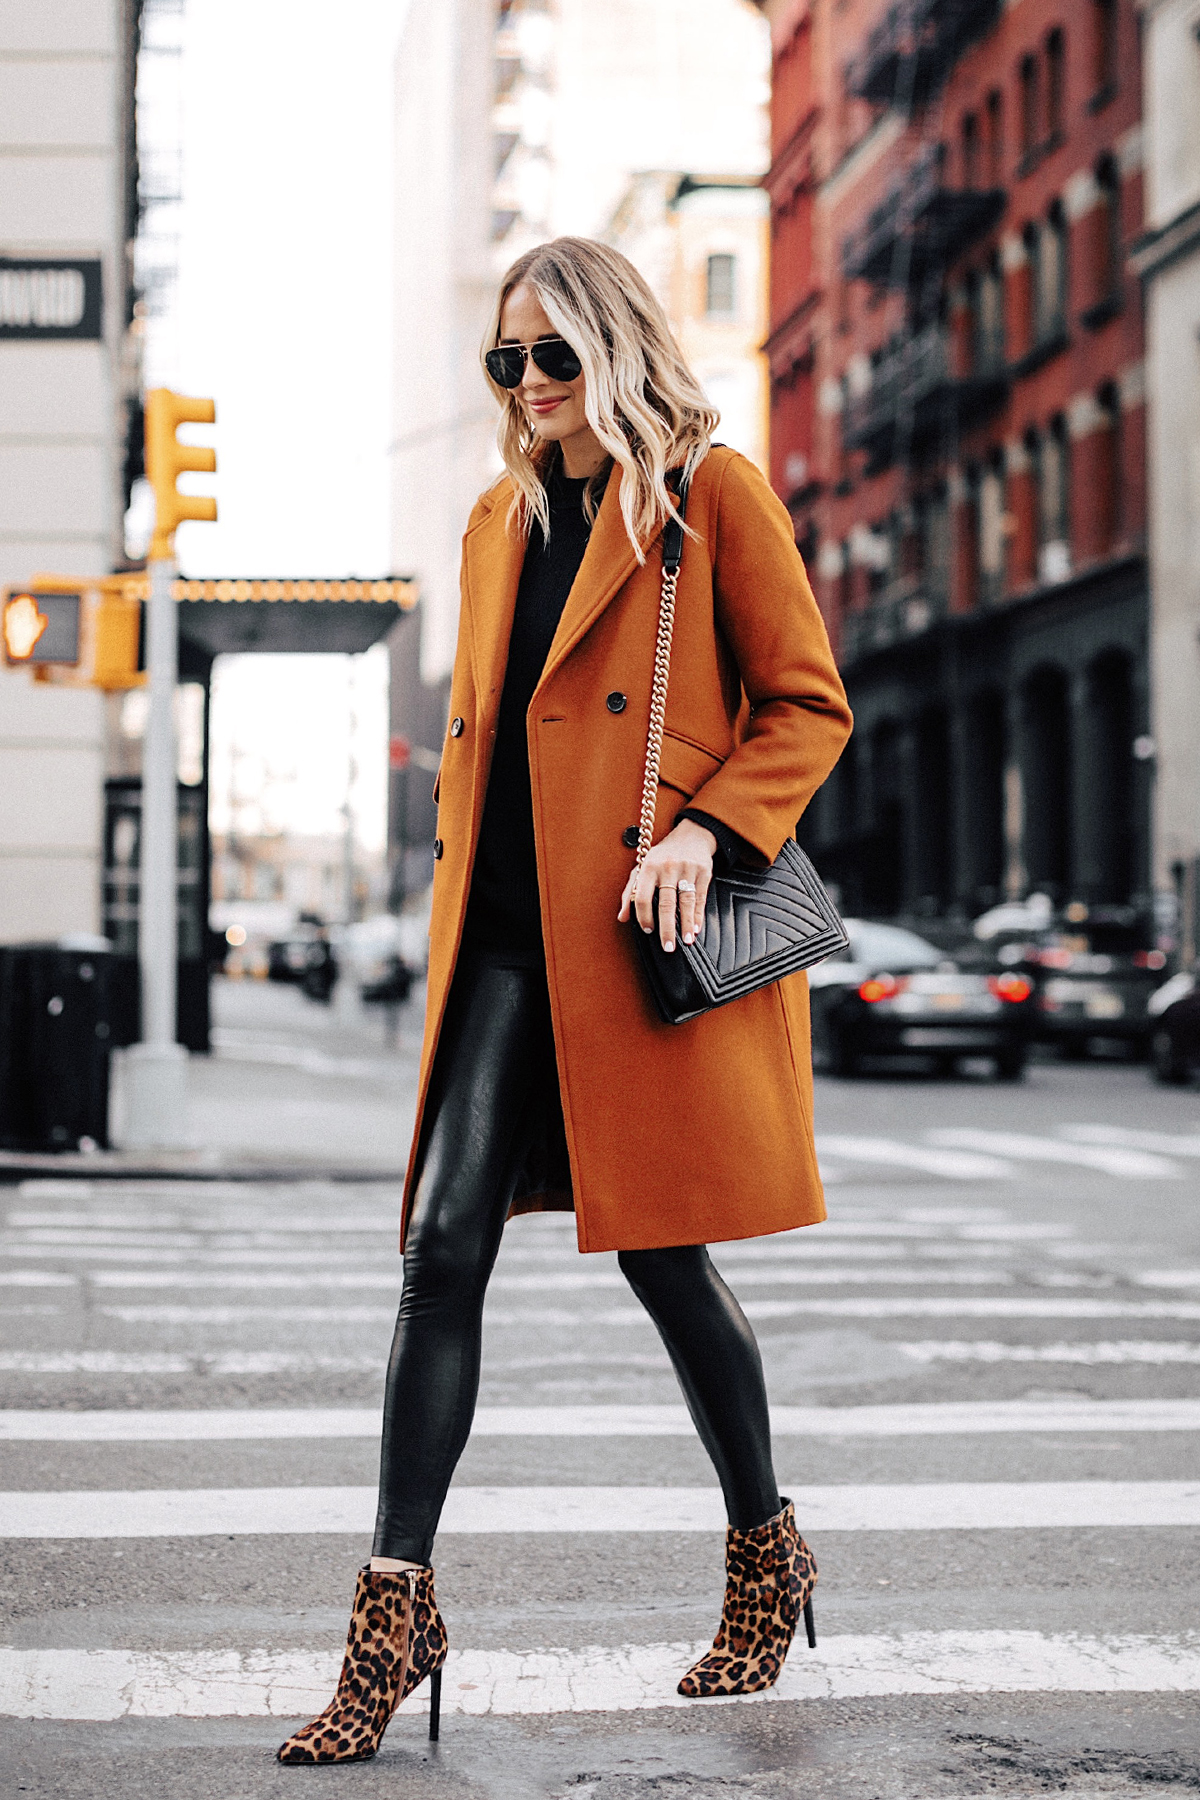 Fashion Jackson Wearing Everlane Dark Camel Wool Coat Faux Leather Leggings Leopard Booties New York Street Style 4